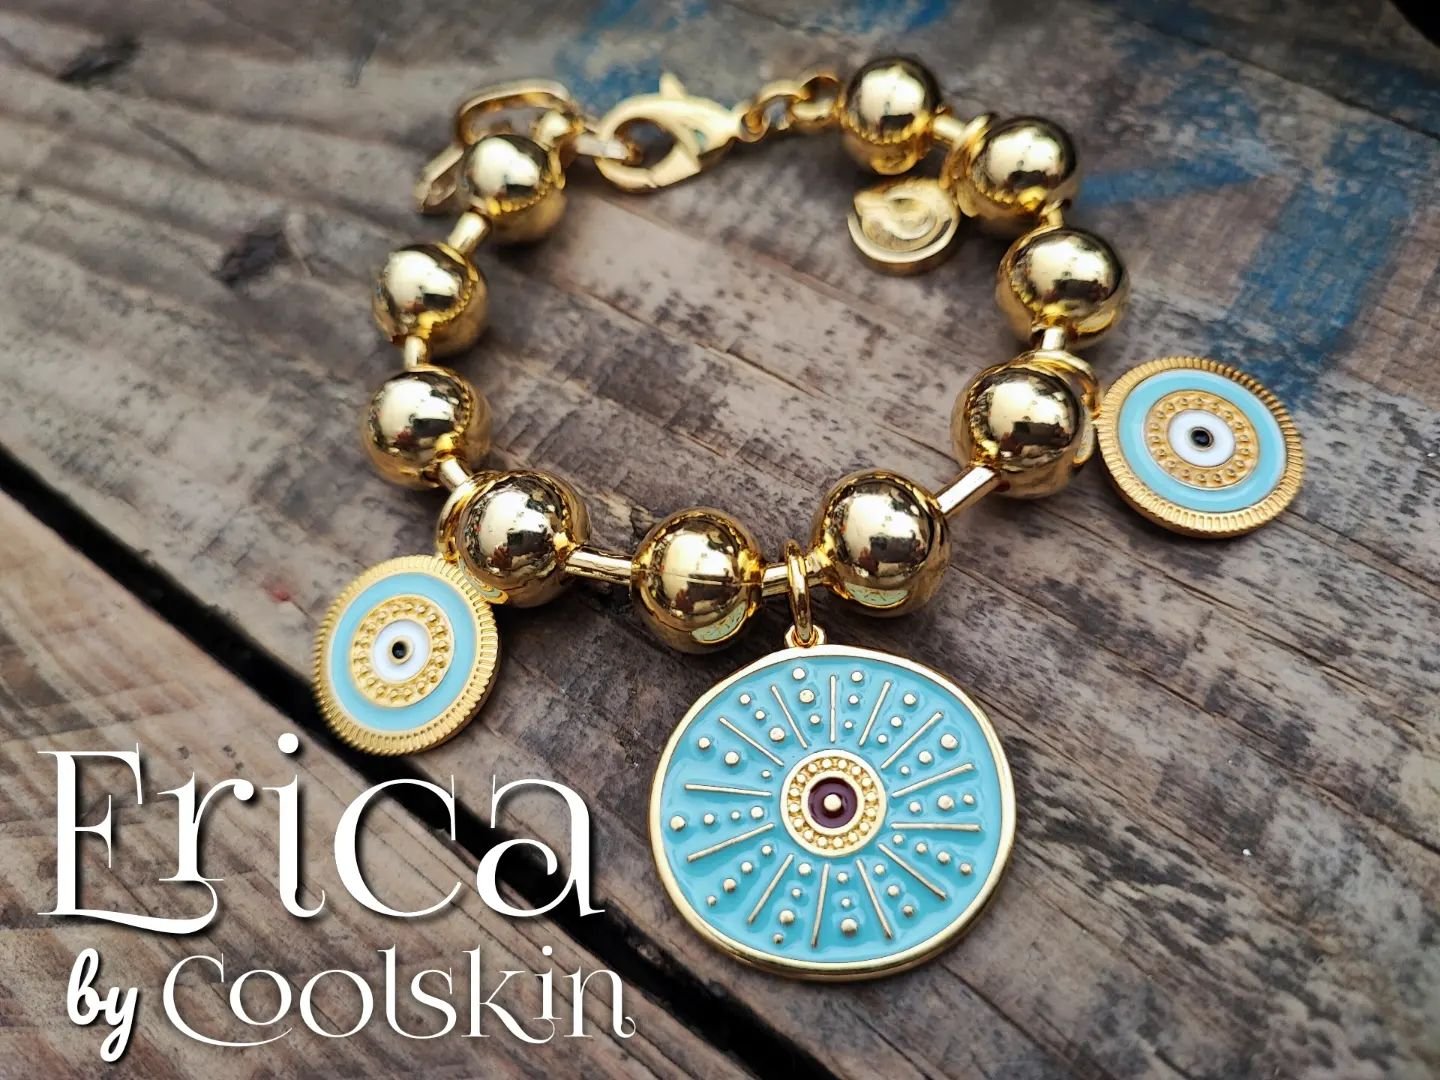 COOLSKIN ERICA BRACELET - Carol & Co Jewelry